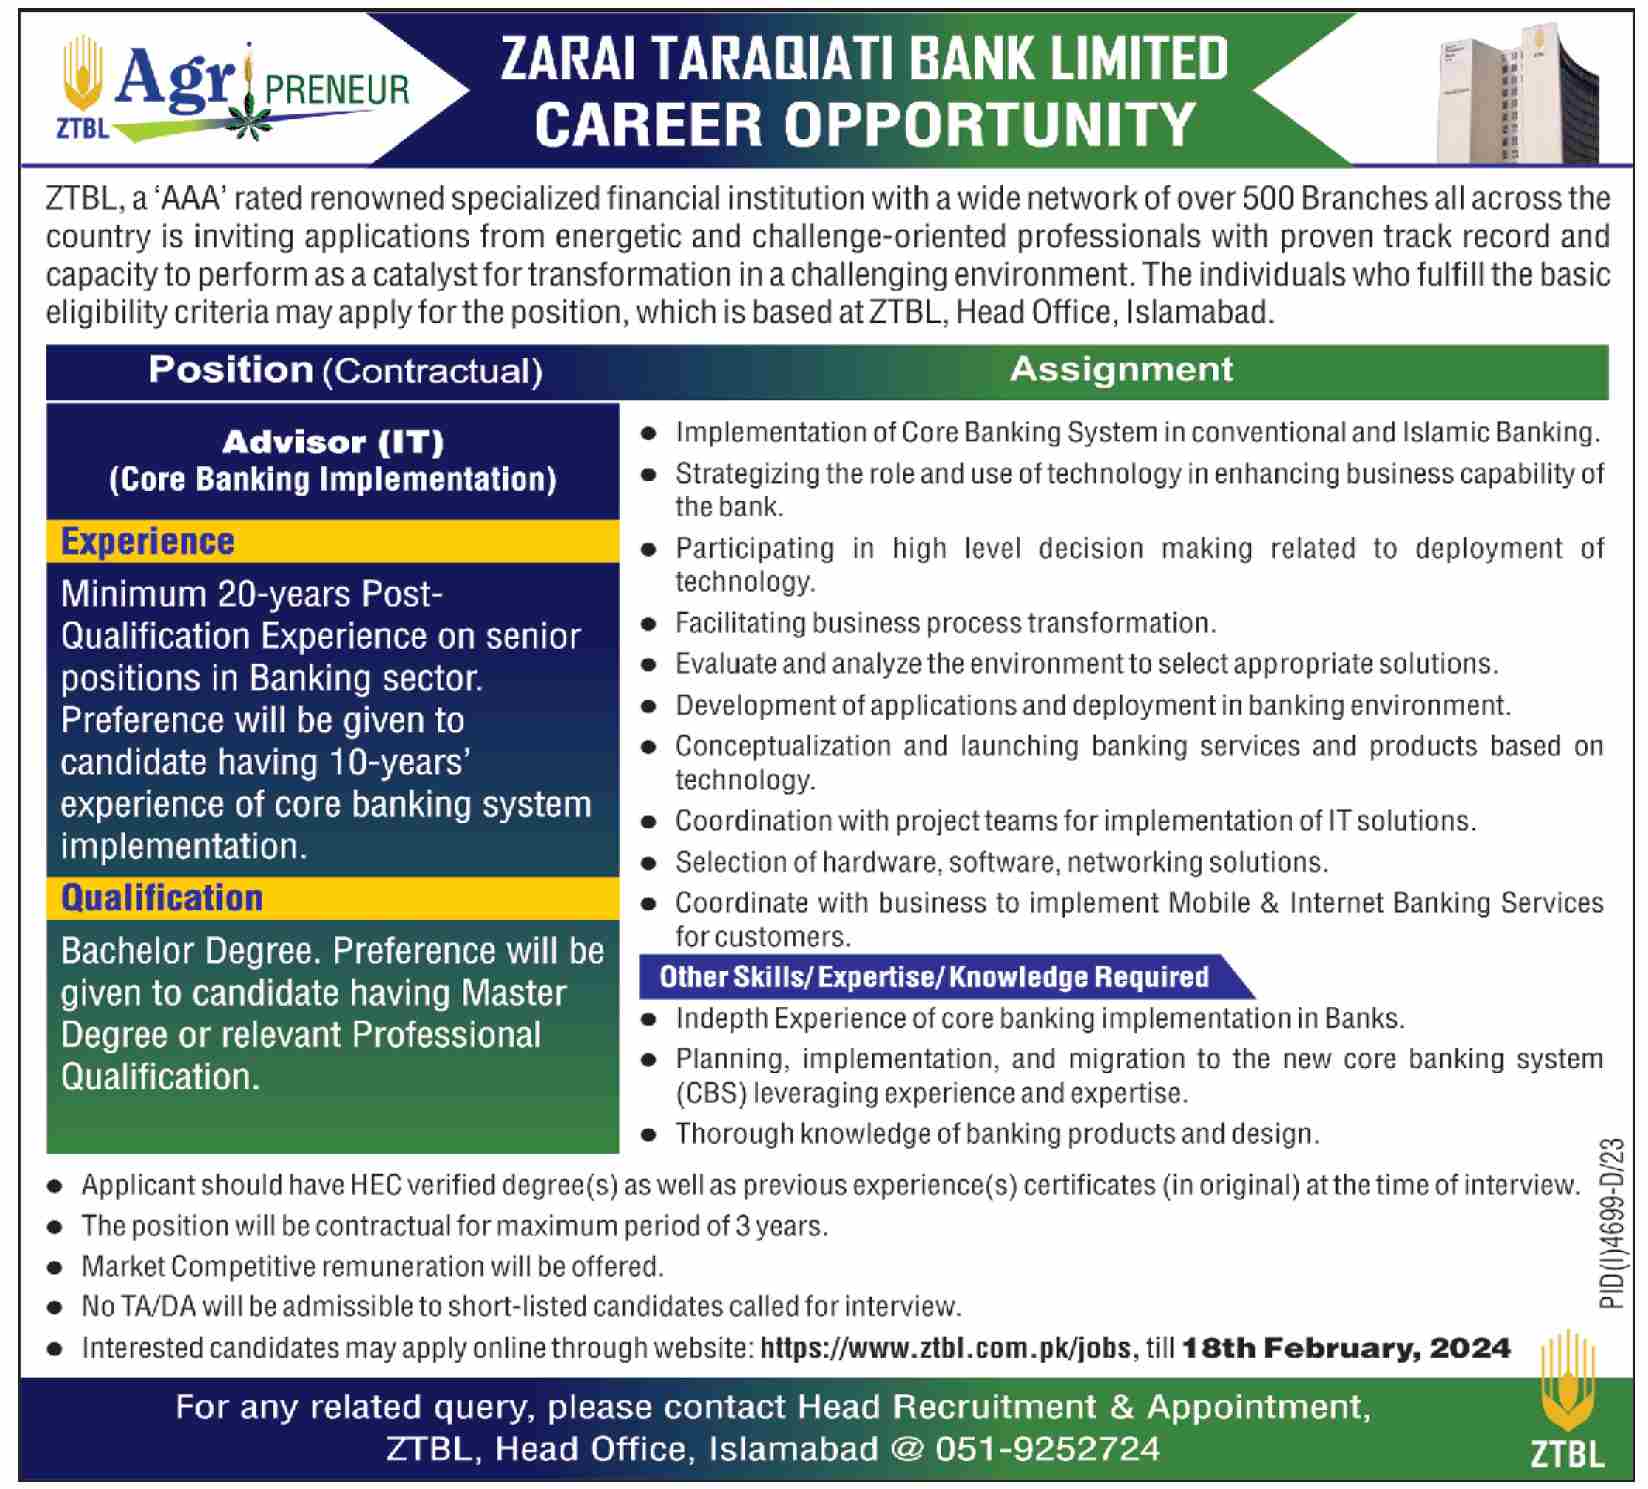 ZTBL Zarai Taraqiati Bank Limited Advisor IT Core Banking Implementation Jobs